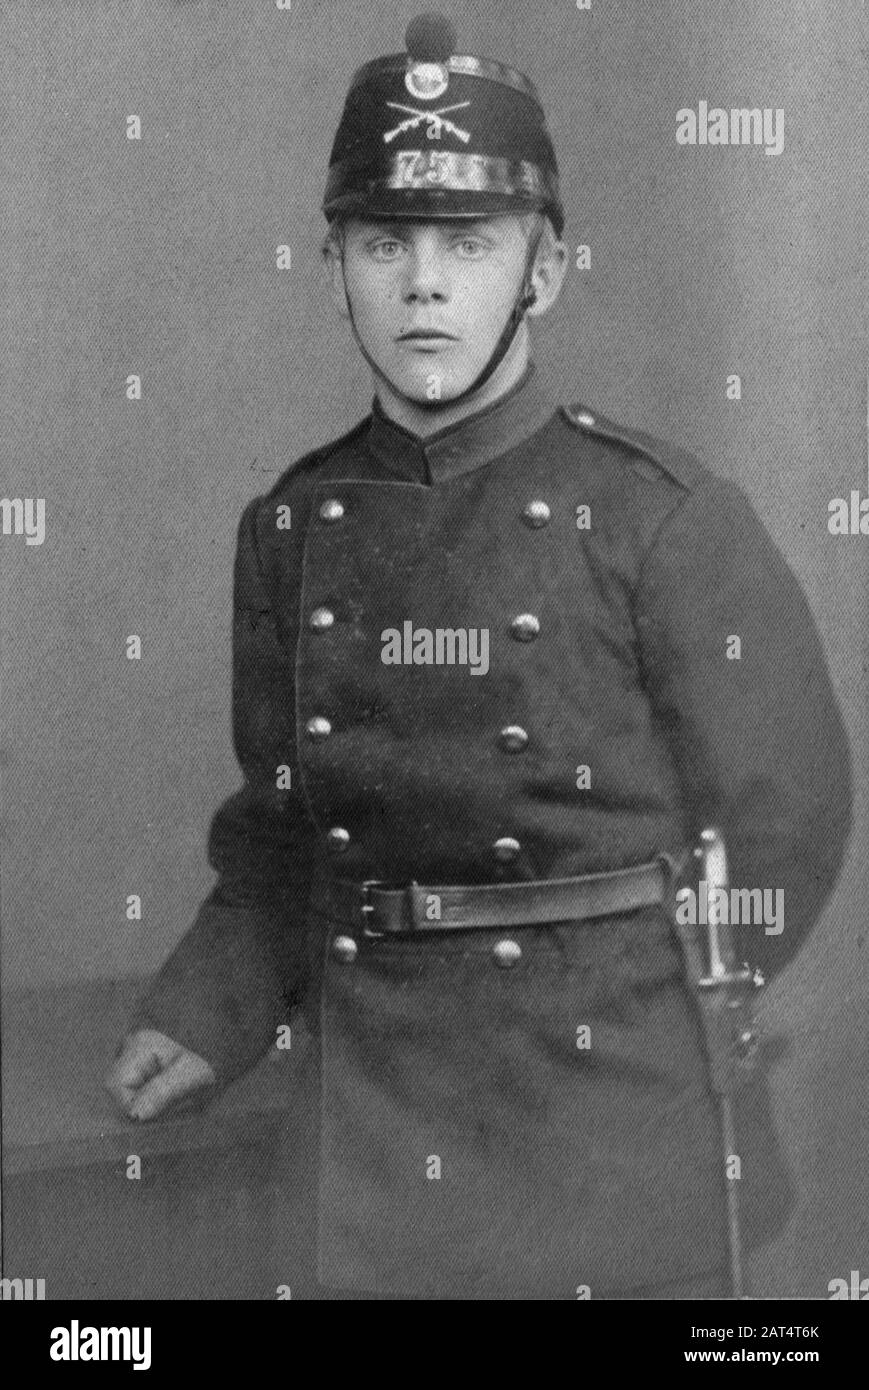 Swiss soldier 75th infantry regiment c.1900 Stock Photo